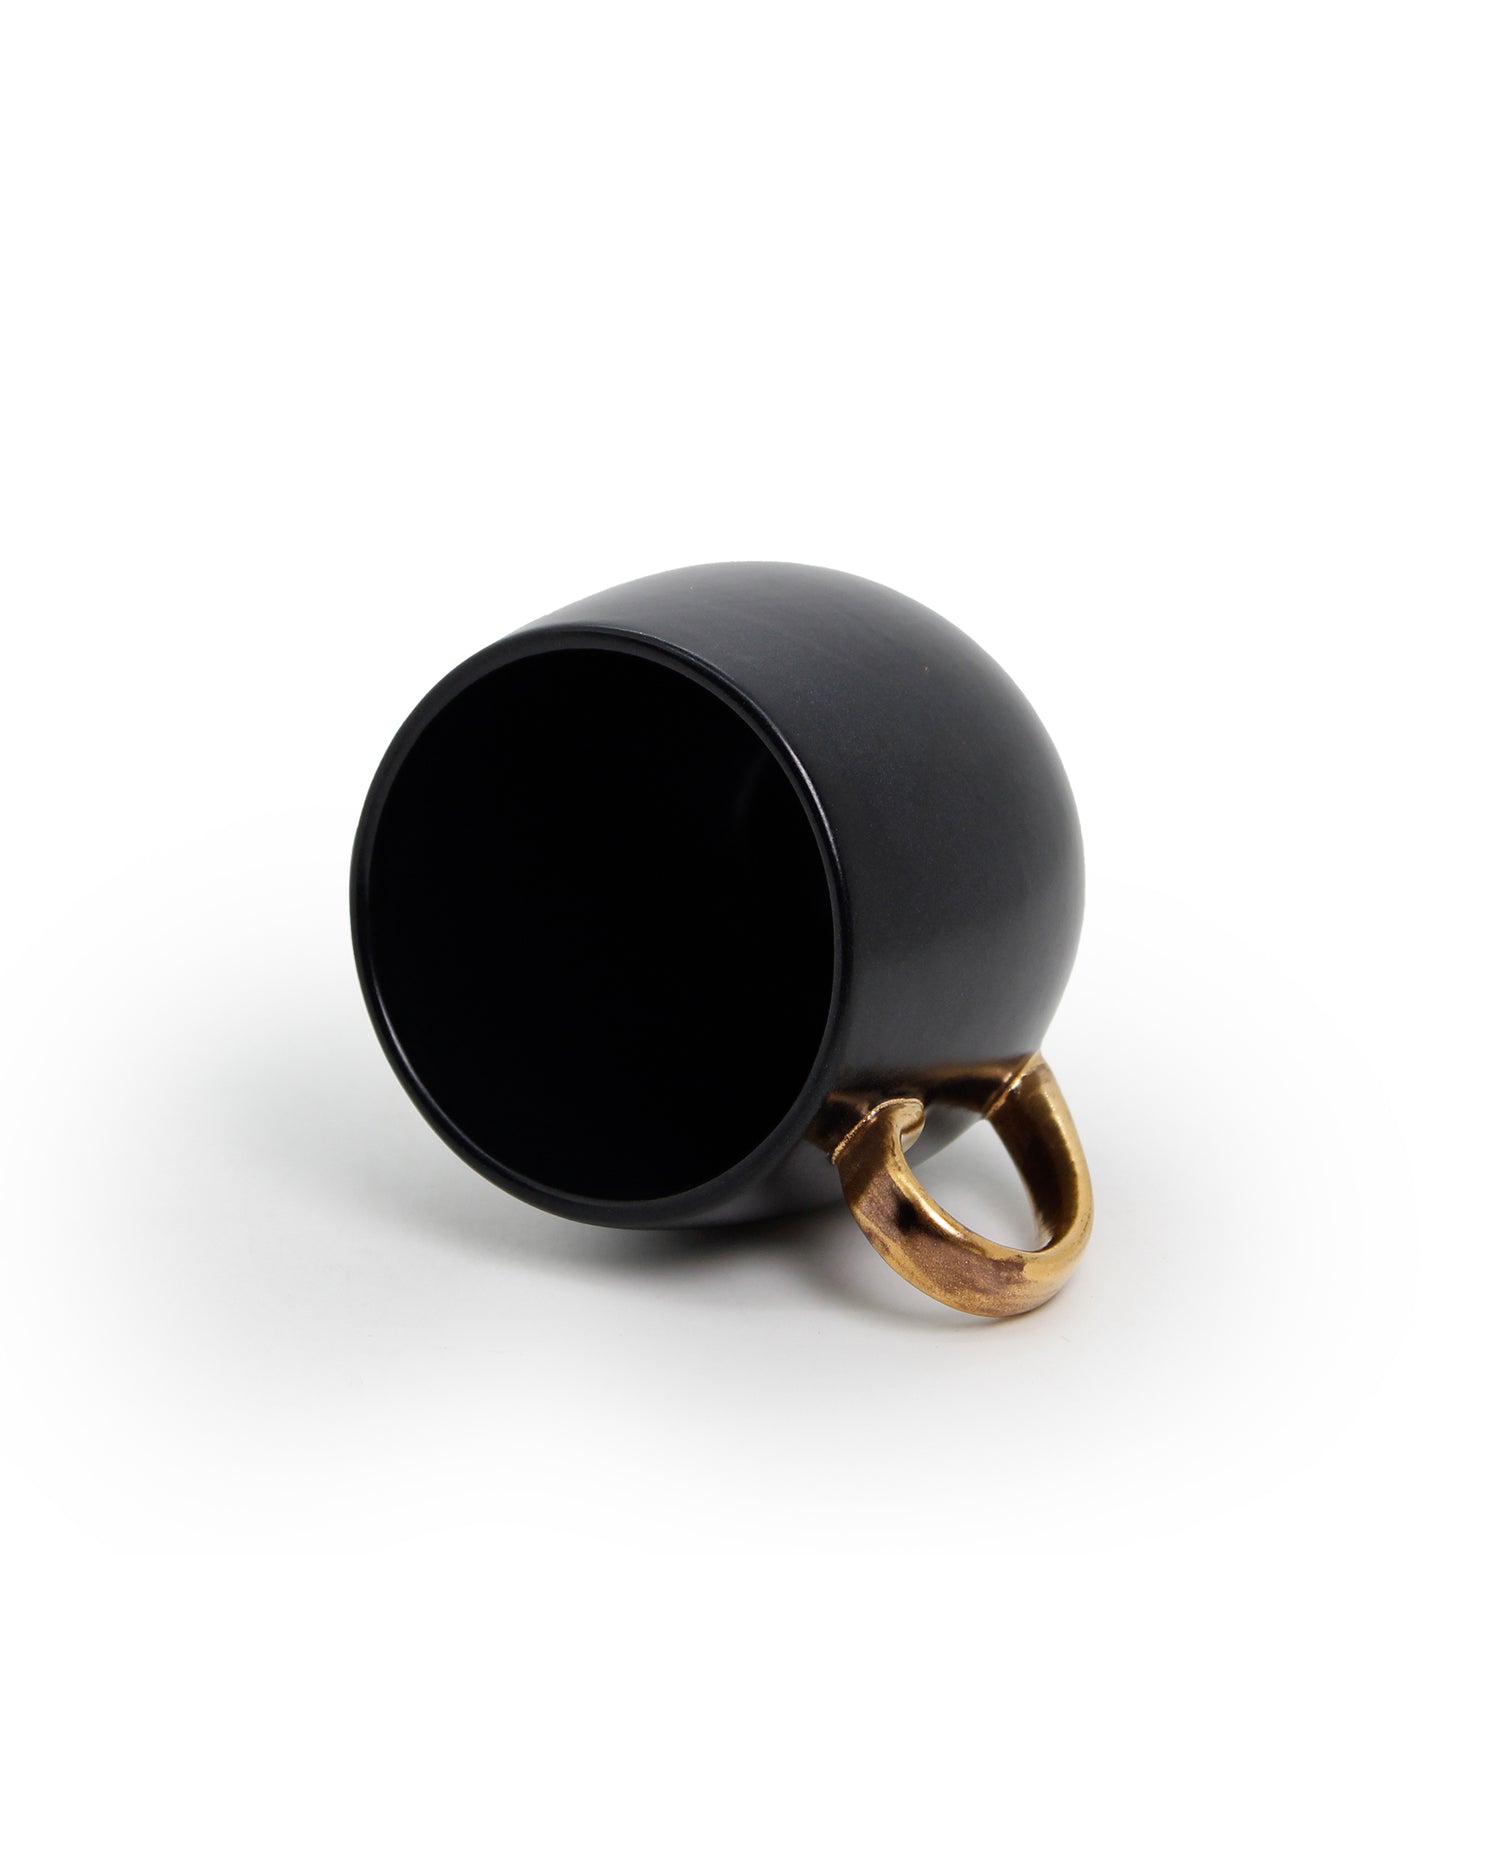 BLACK / Set of 6 * 180ml || Bloom luxurious Tea Mug | Golden handle